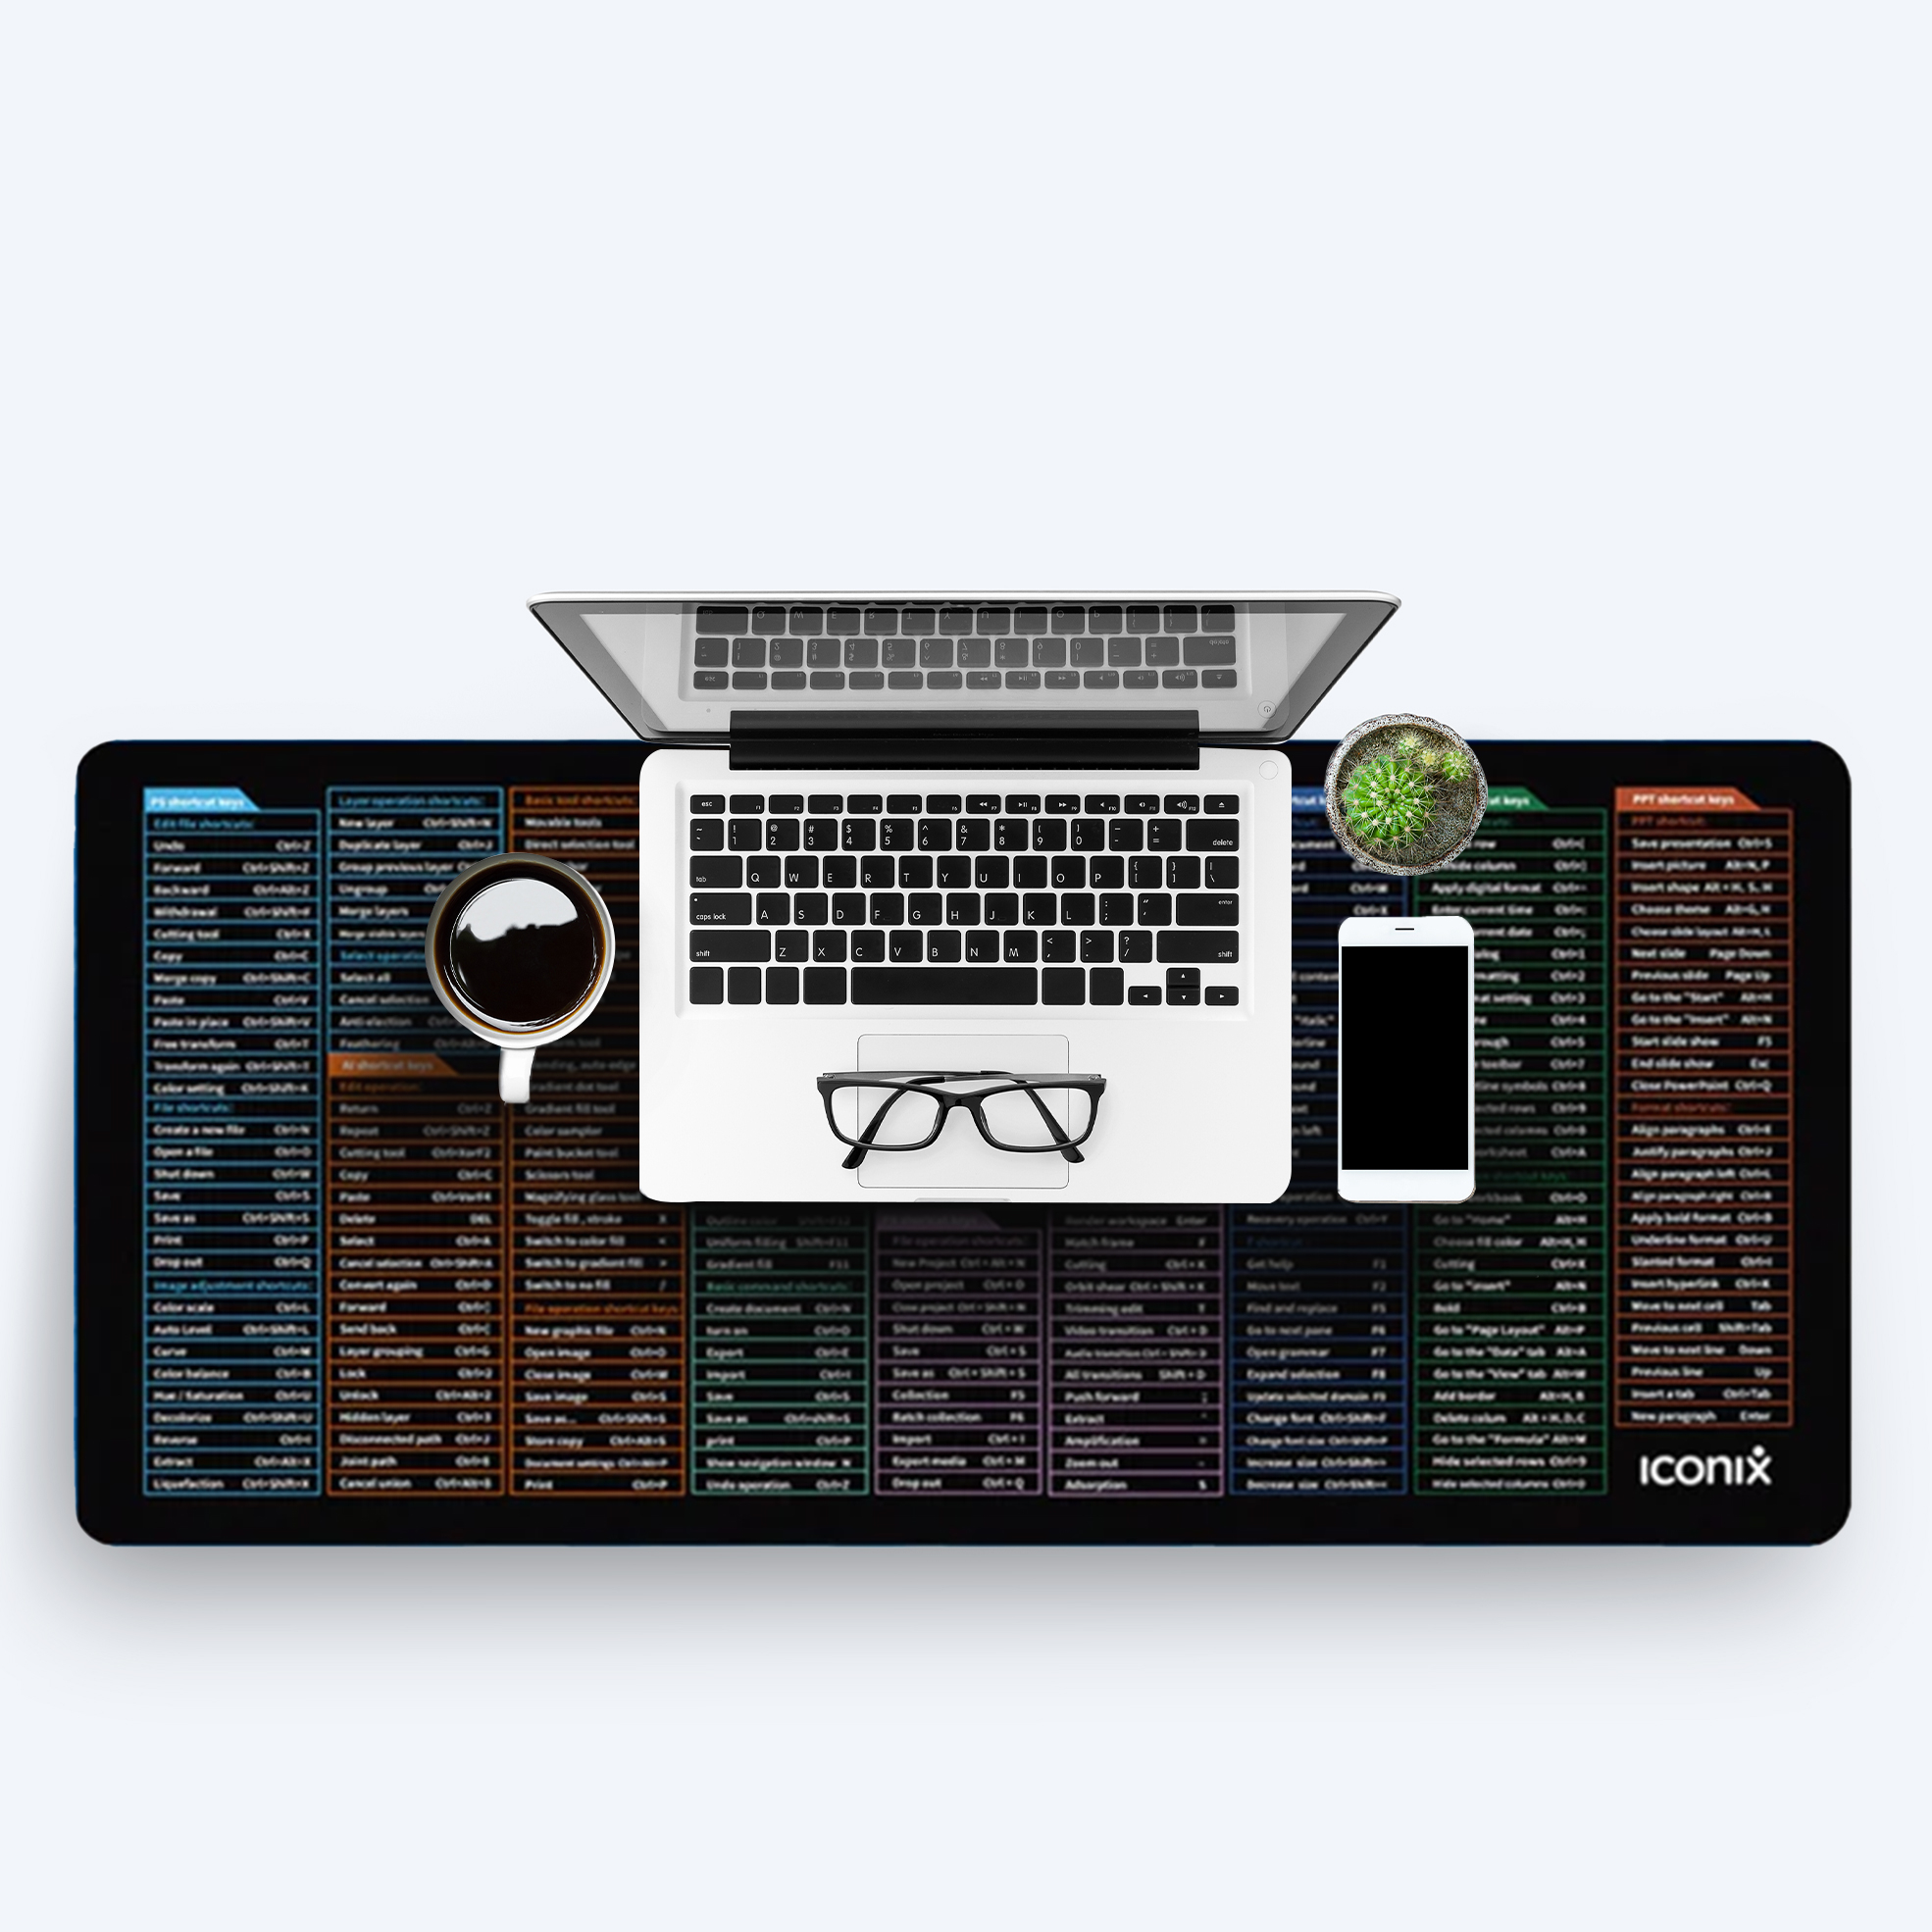 shortcut keys for computer